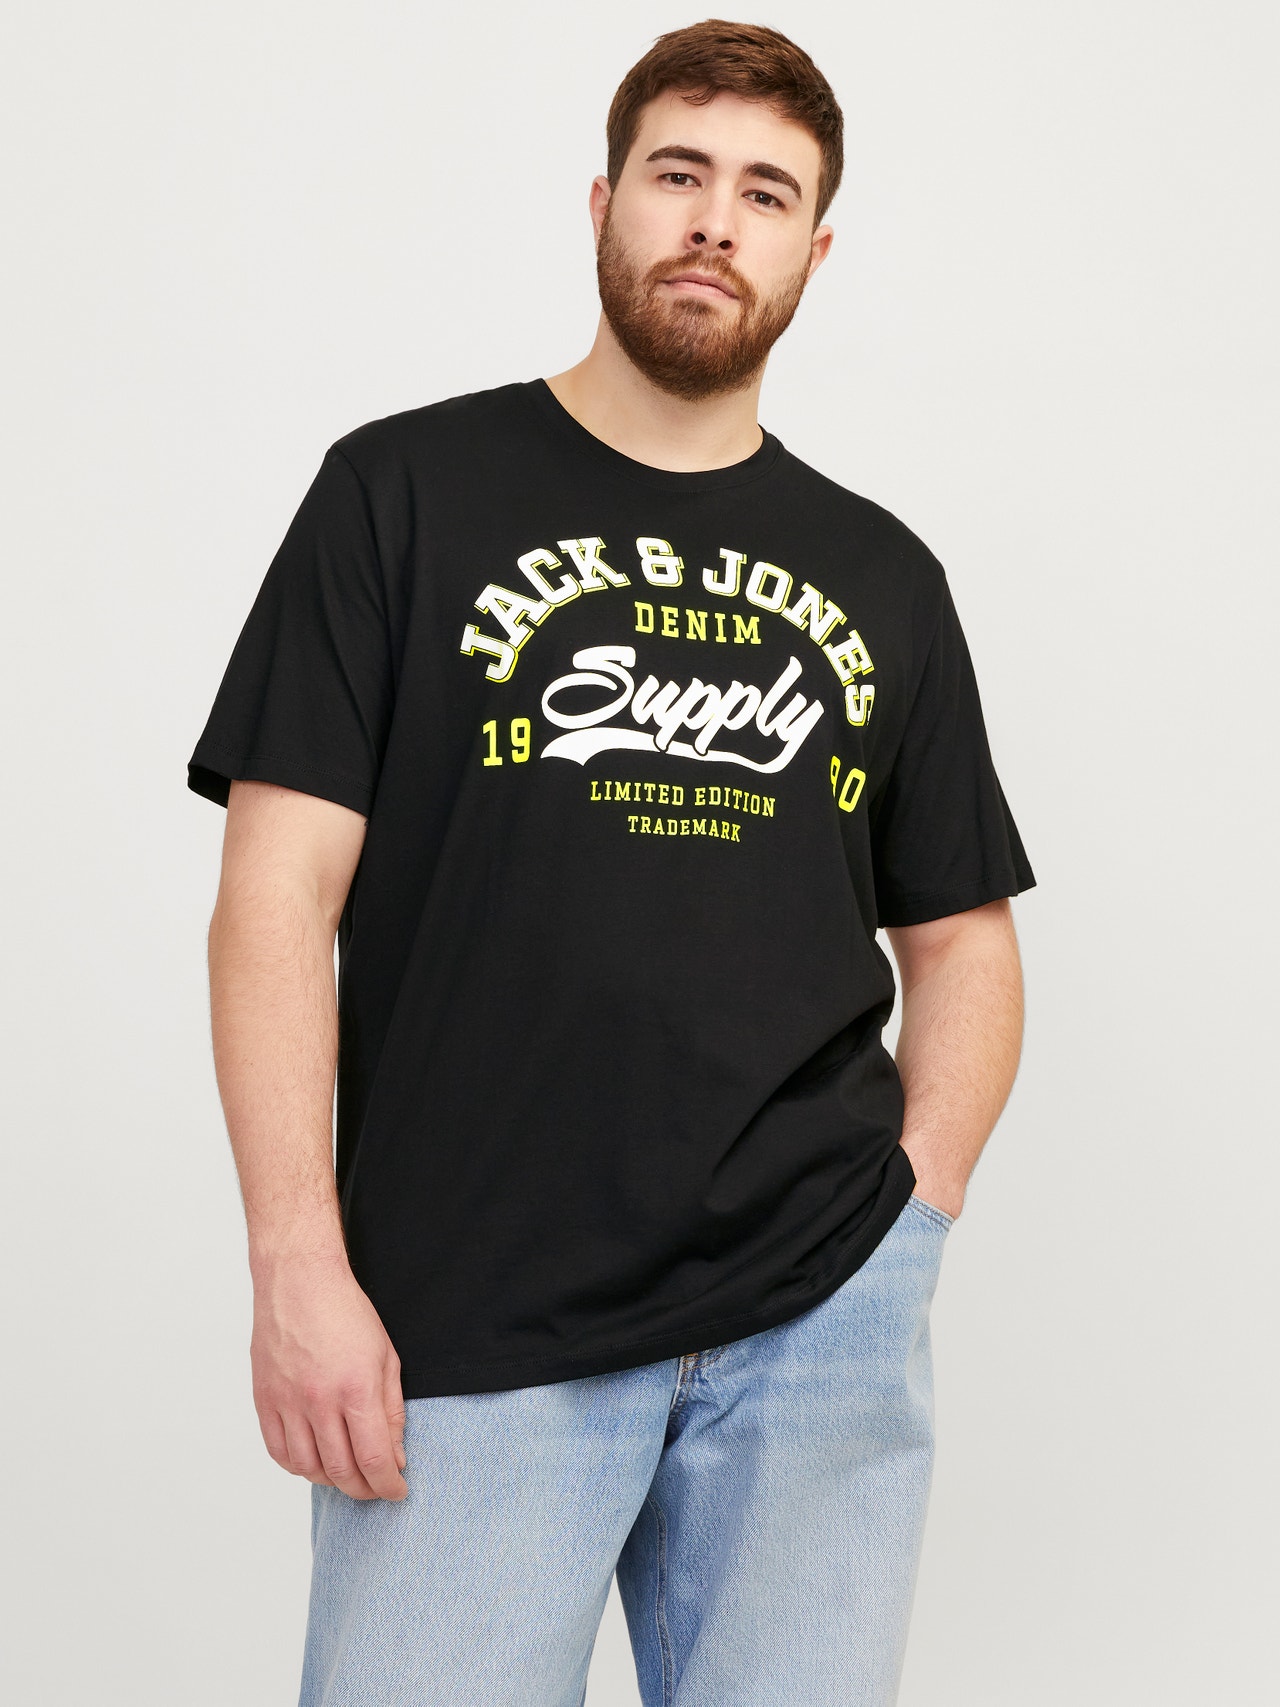 Jack & Jones Plus Size Z logo T-shirt -Black - 12243611